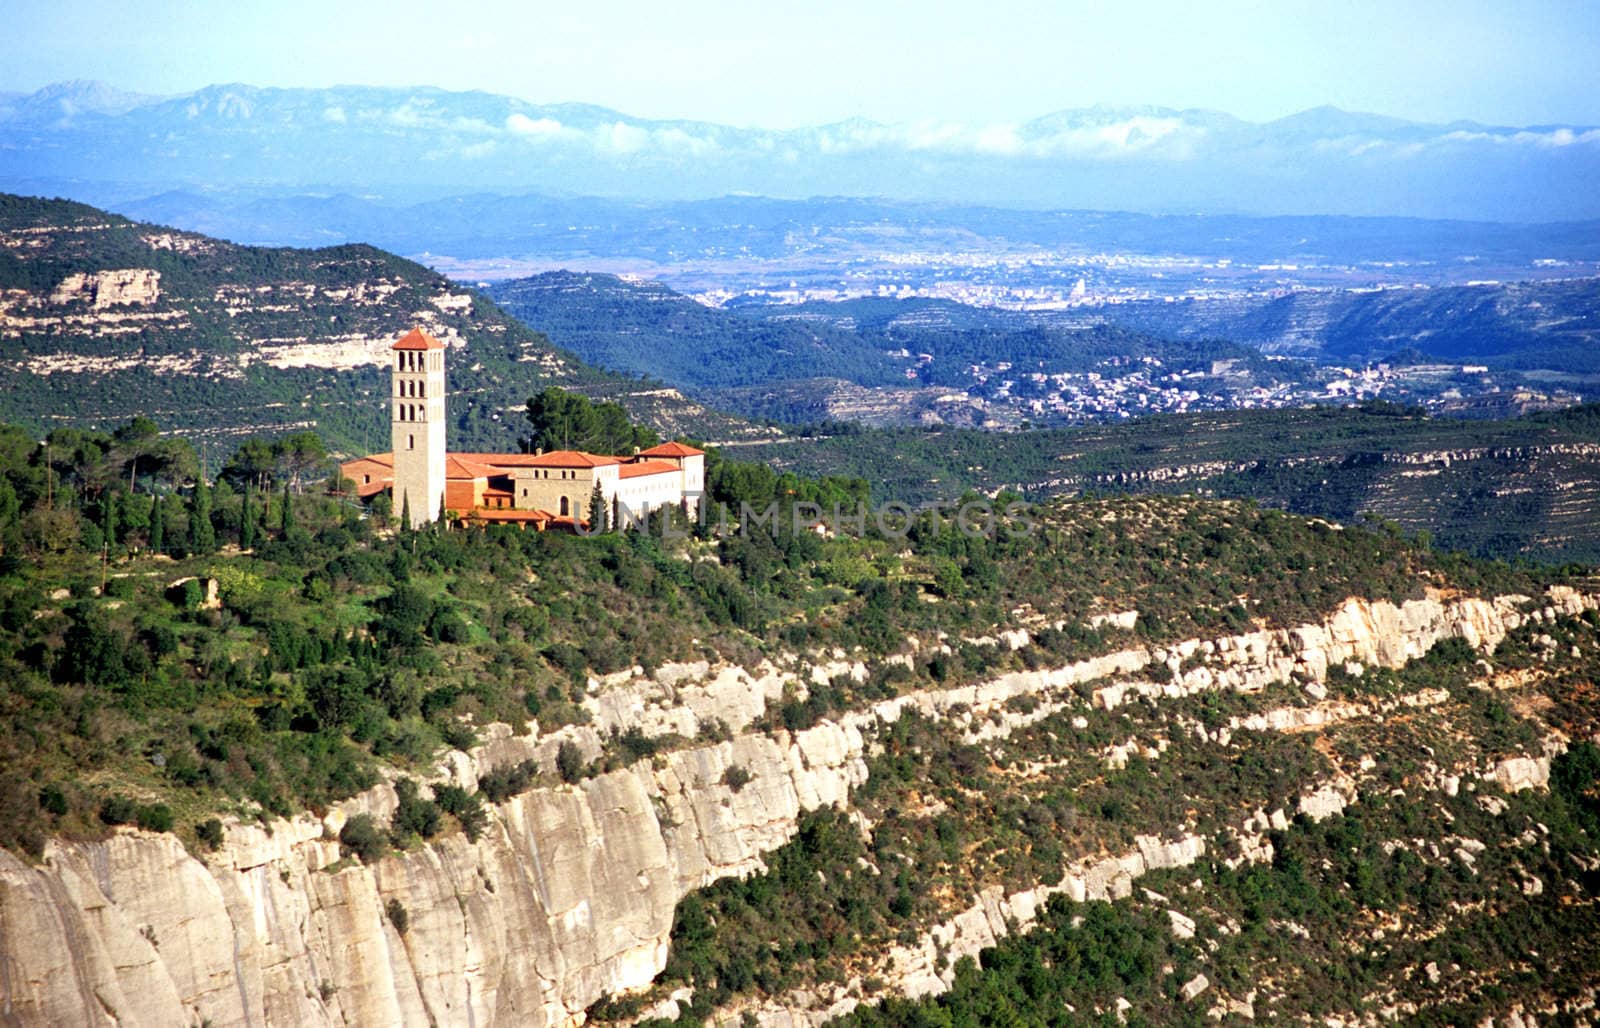 Spanish Monastery by ACMPhoto